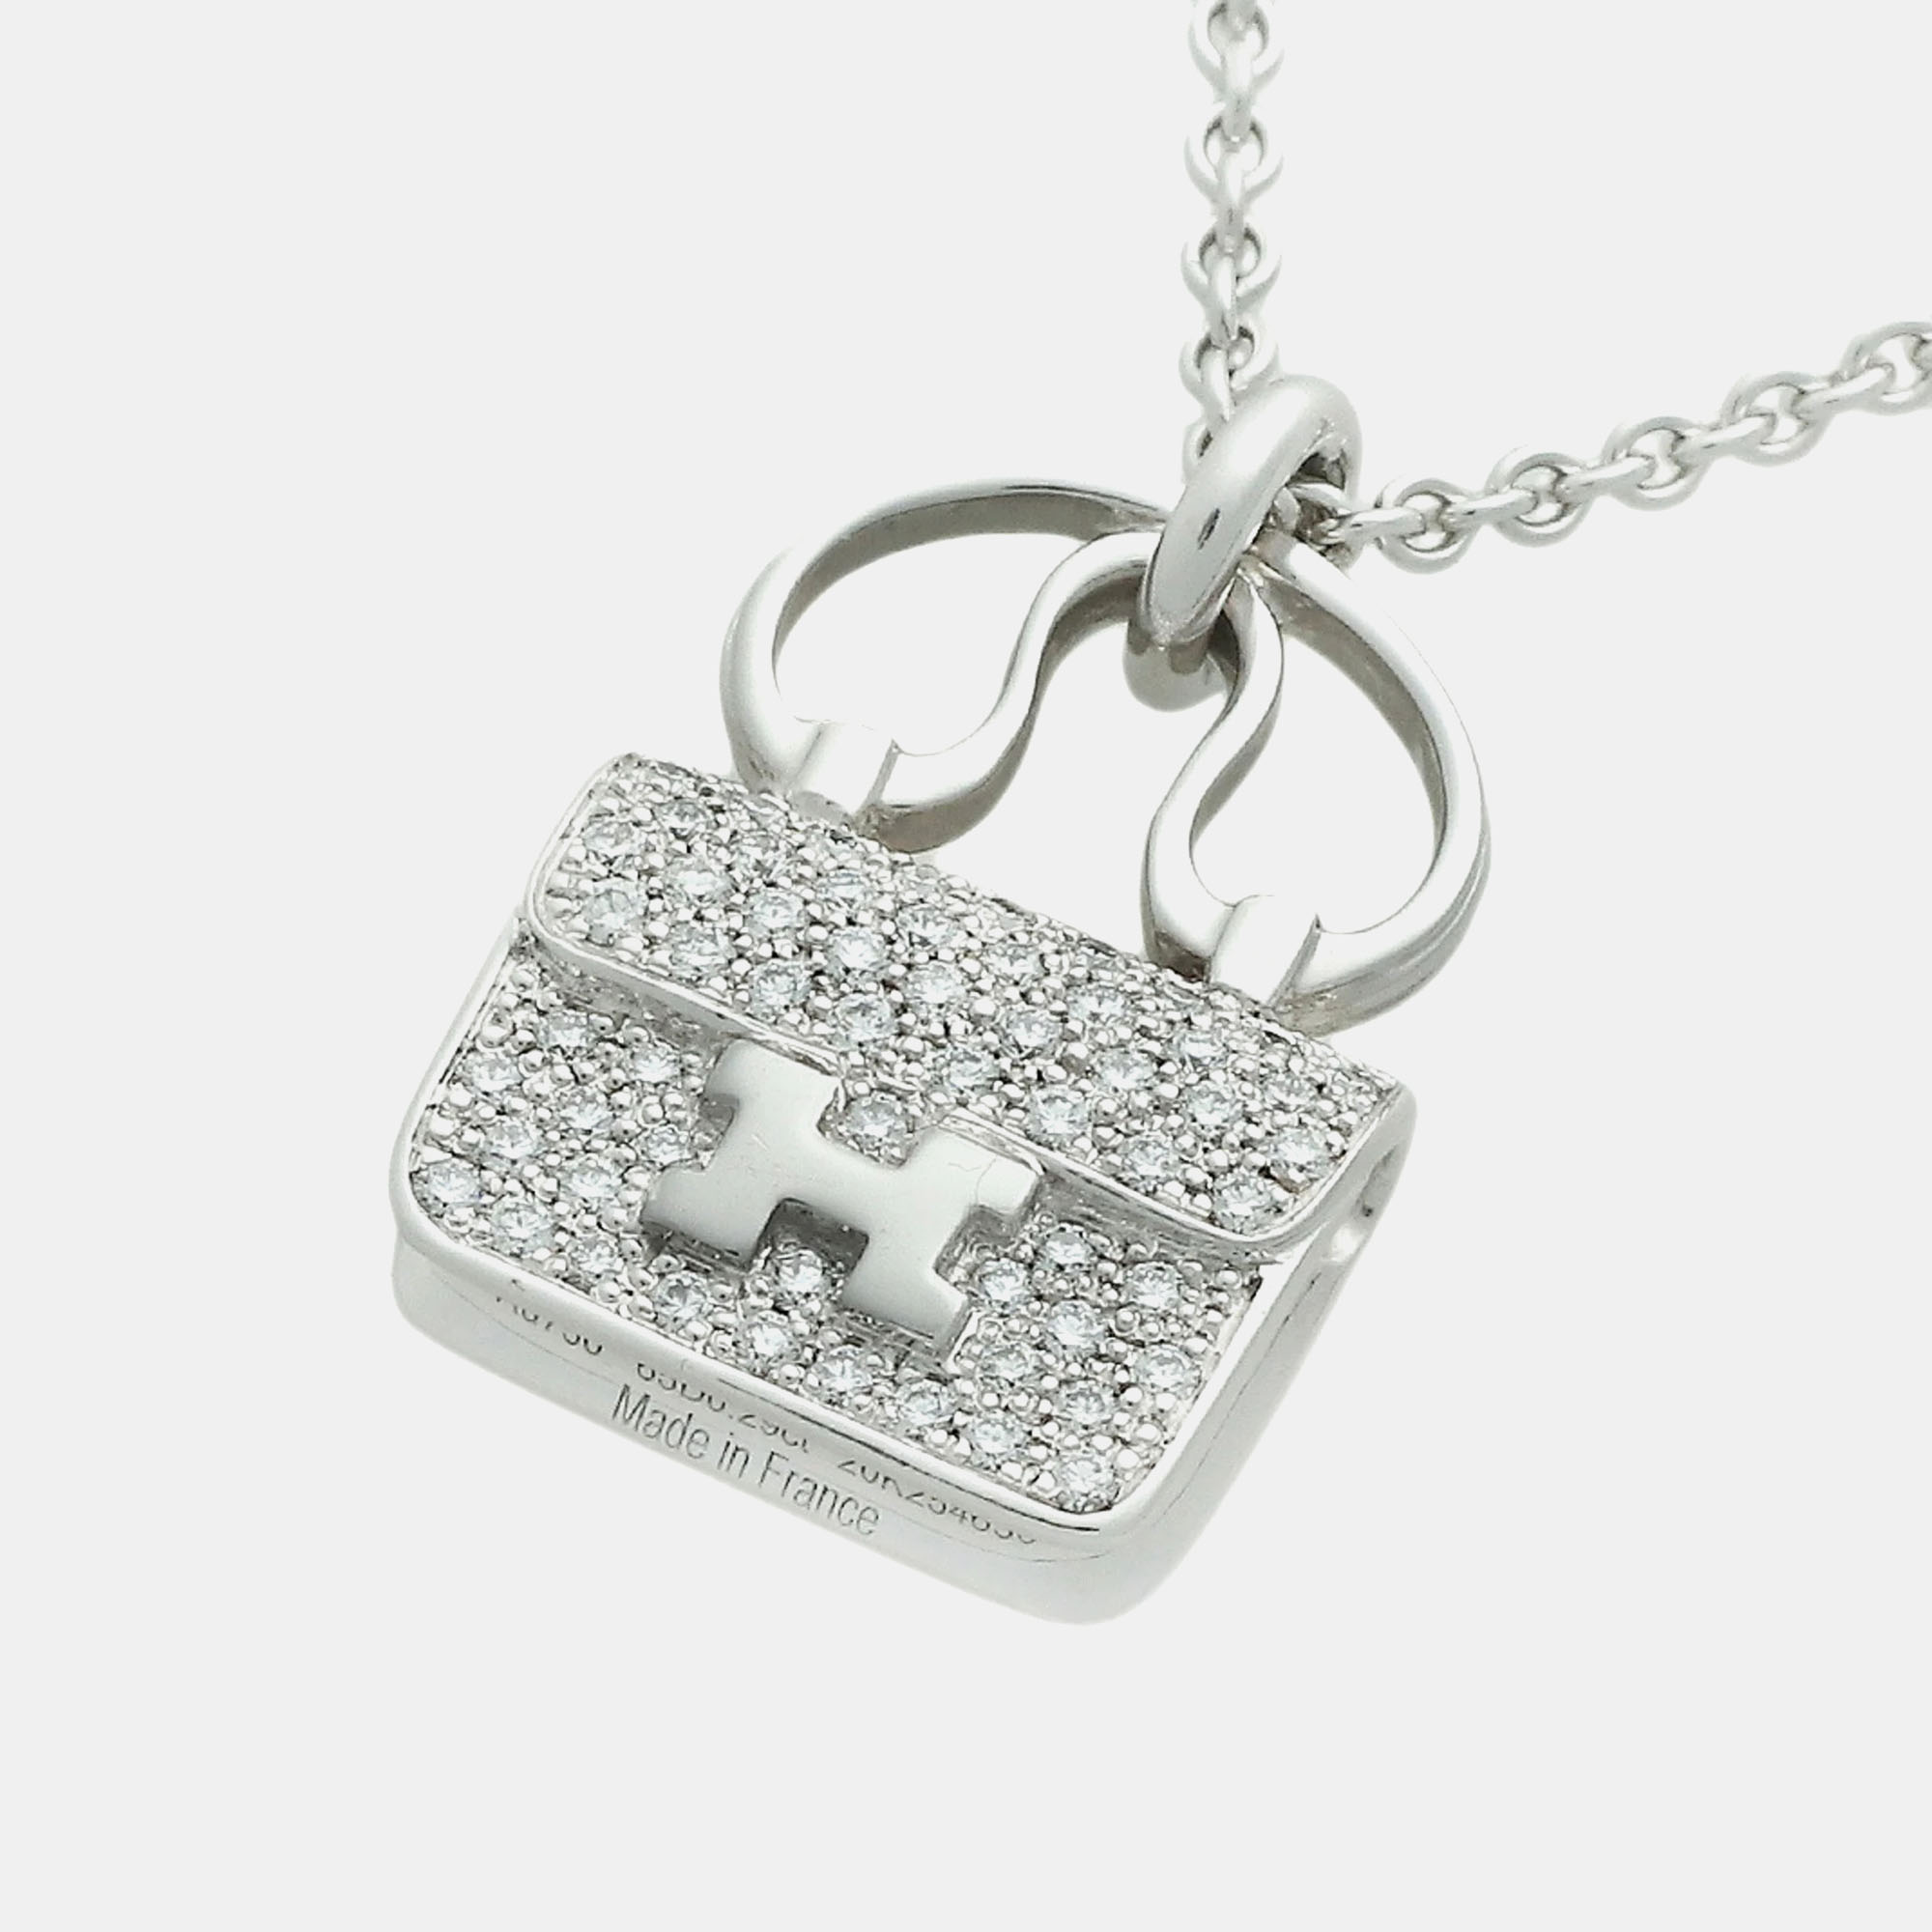 Hermes 18k white gold amulet constance necklace